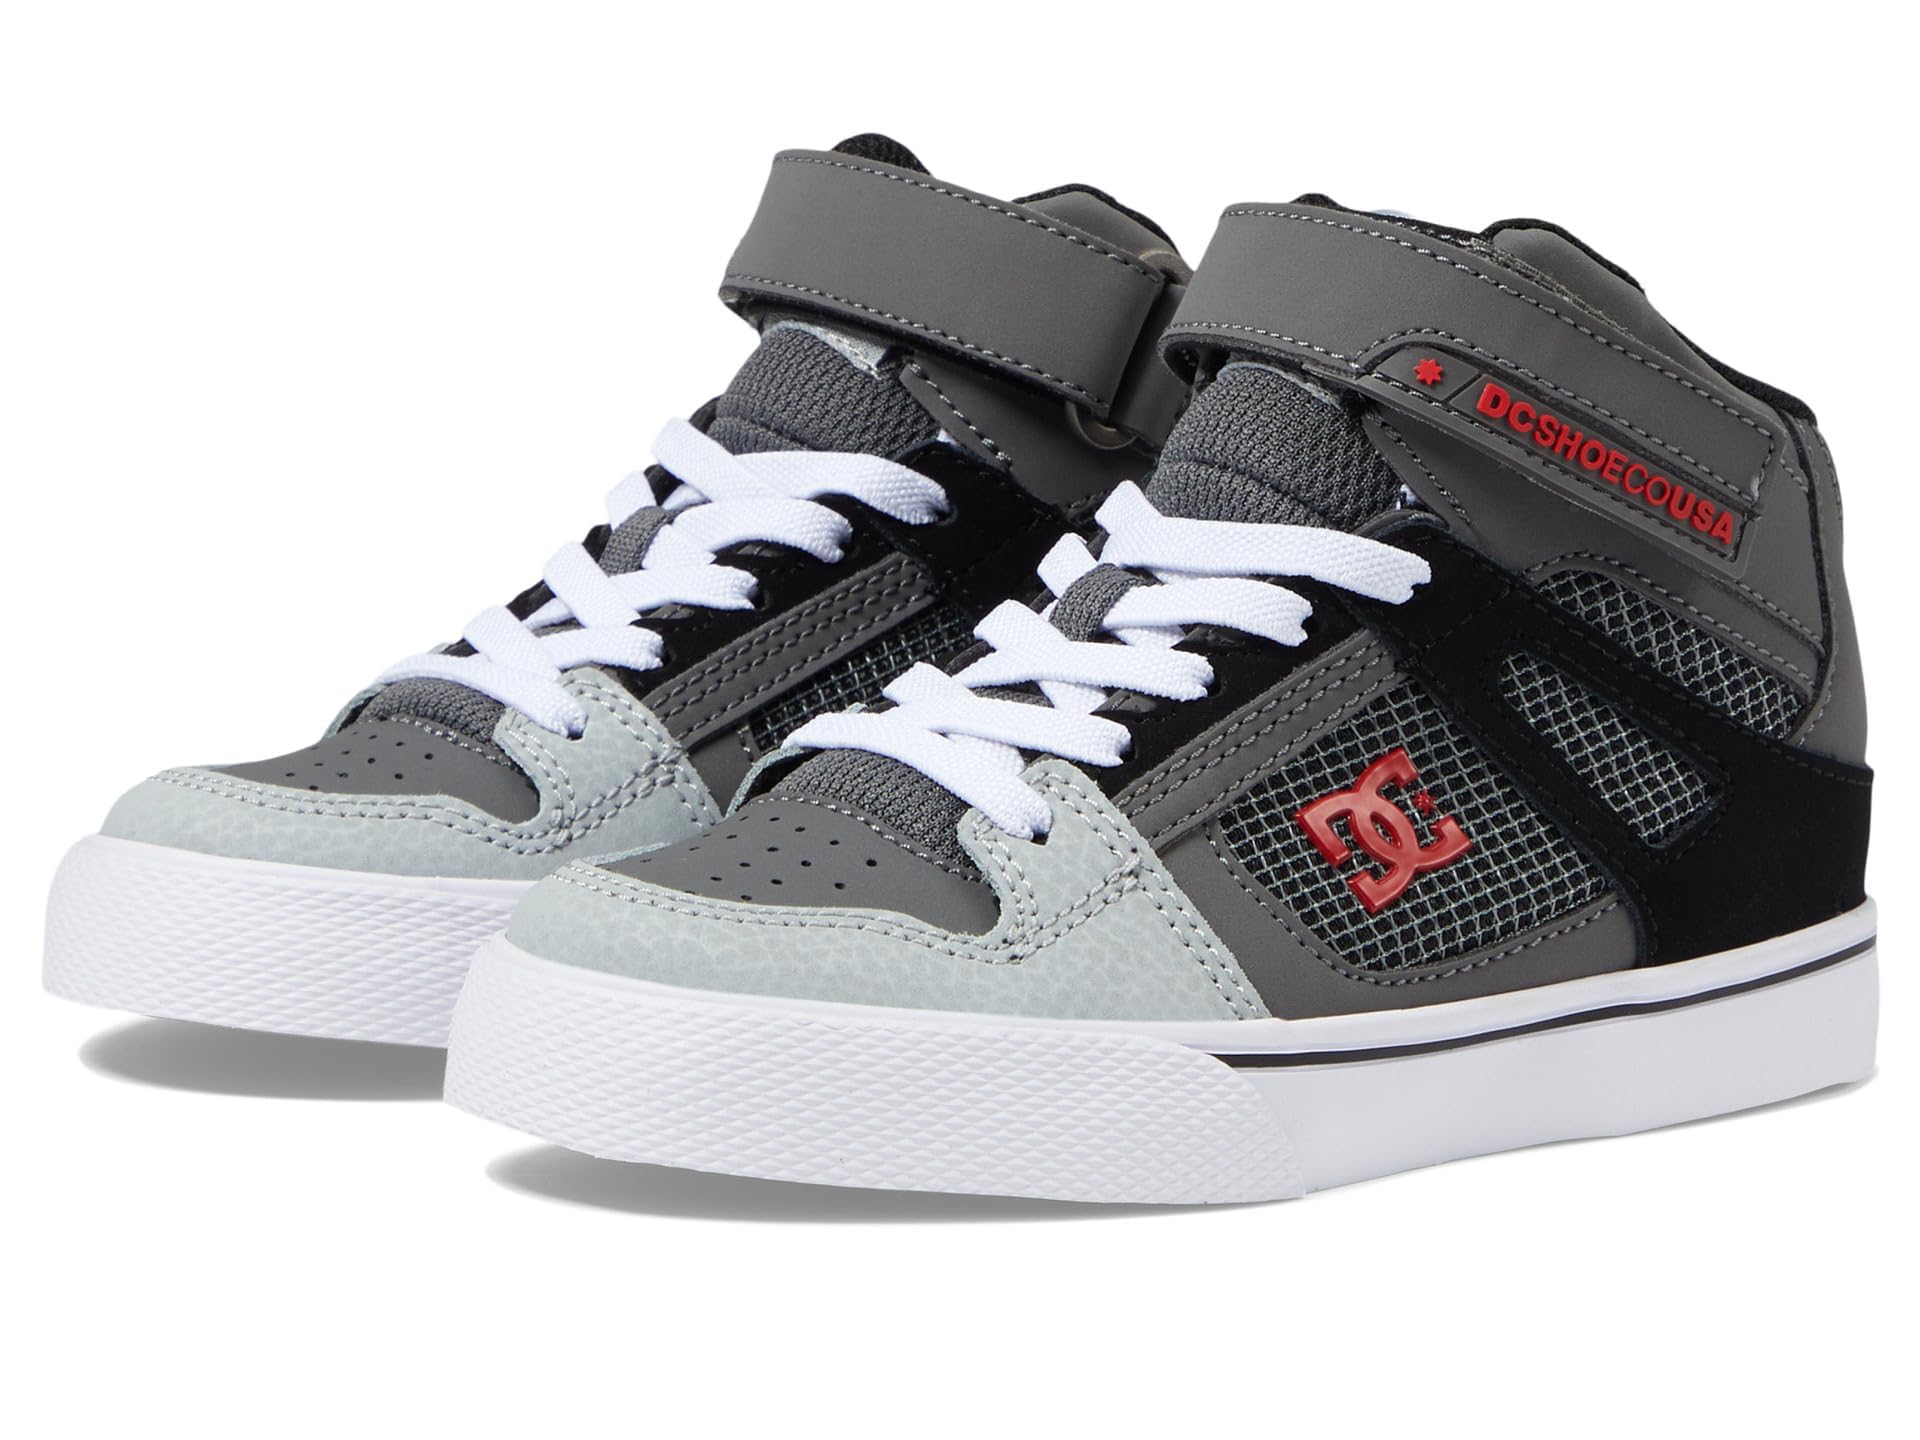 DC Unisex-Child Pure High Top Ev Skate Shoe